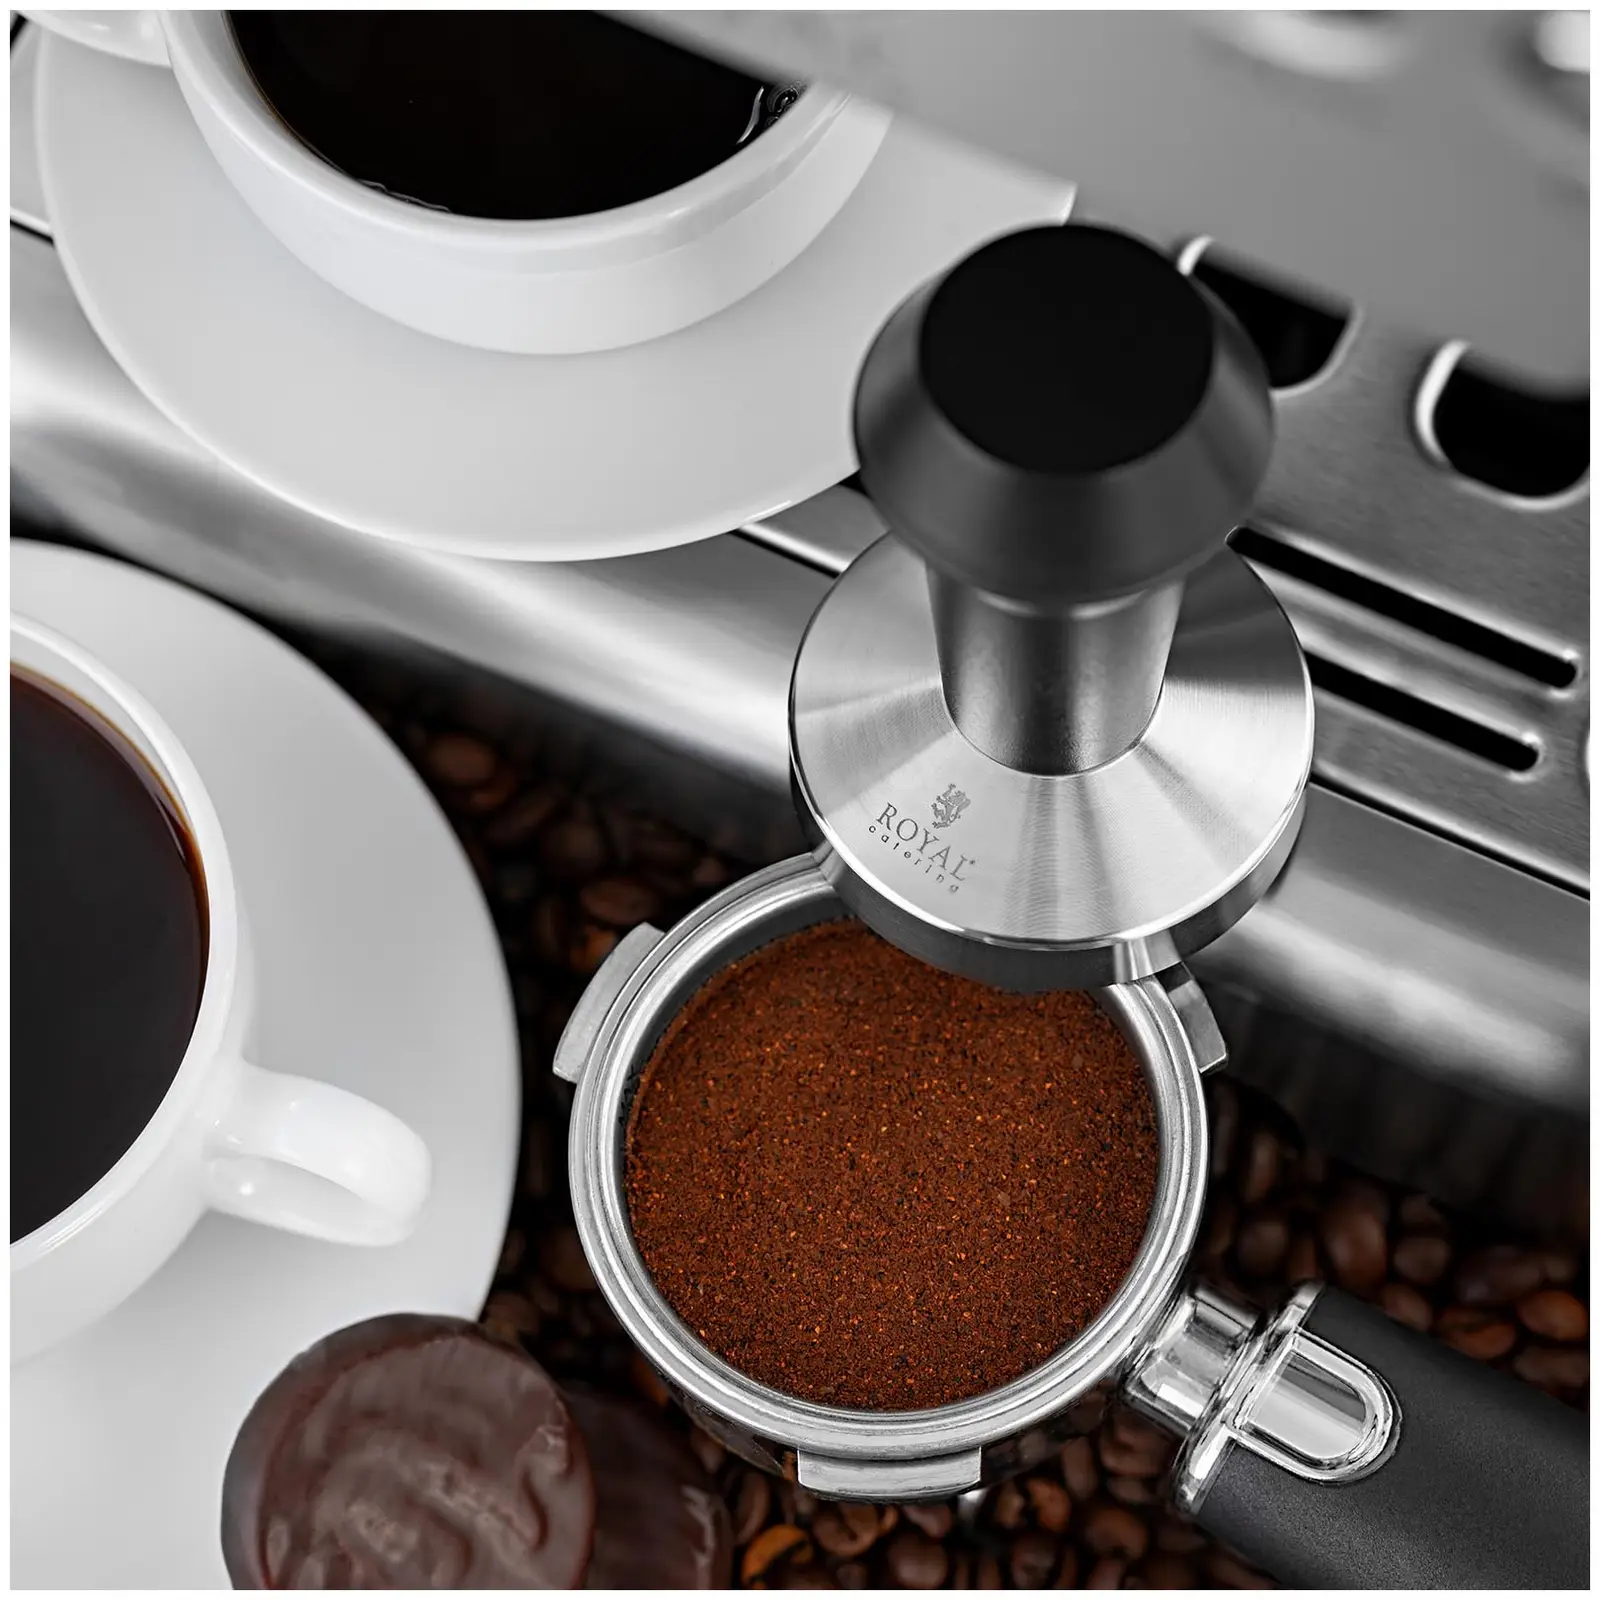 Prensador de café  - Acero inoxidable, plástico - Ø 58 x 85 mm